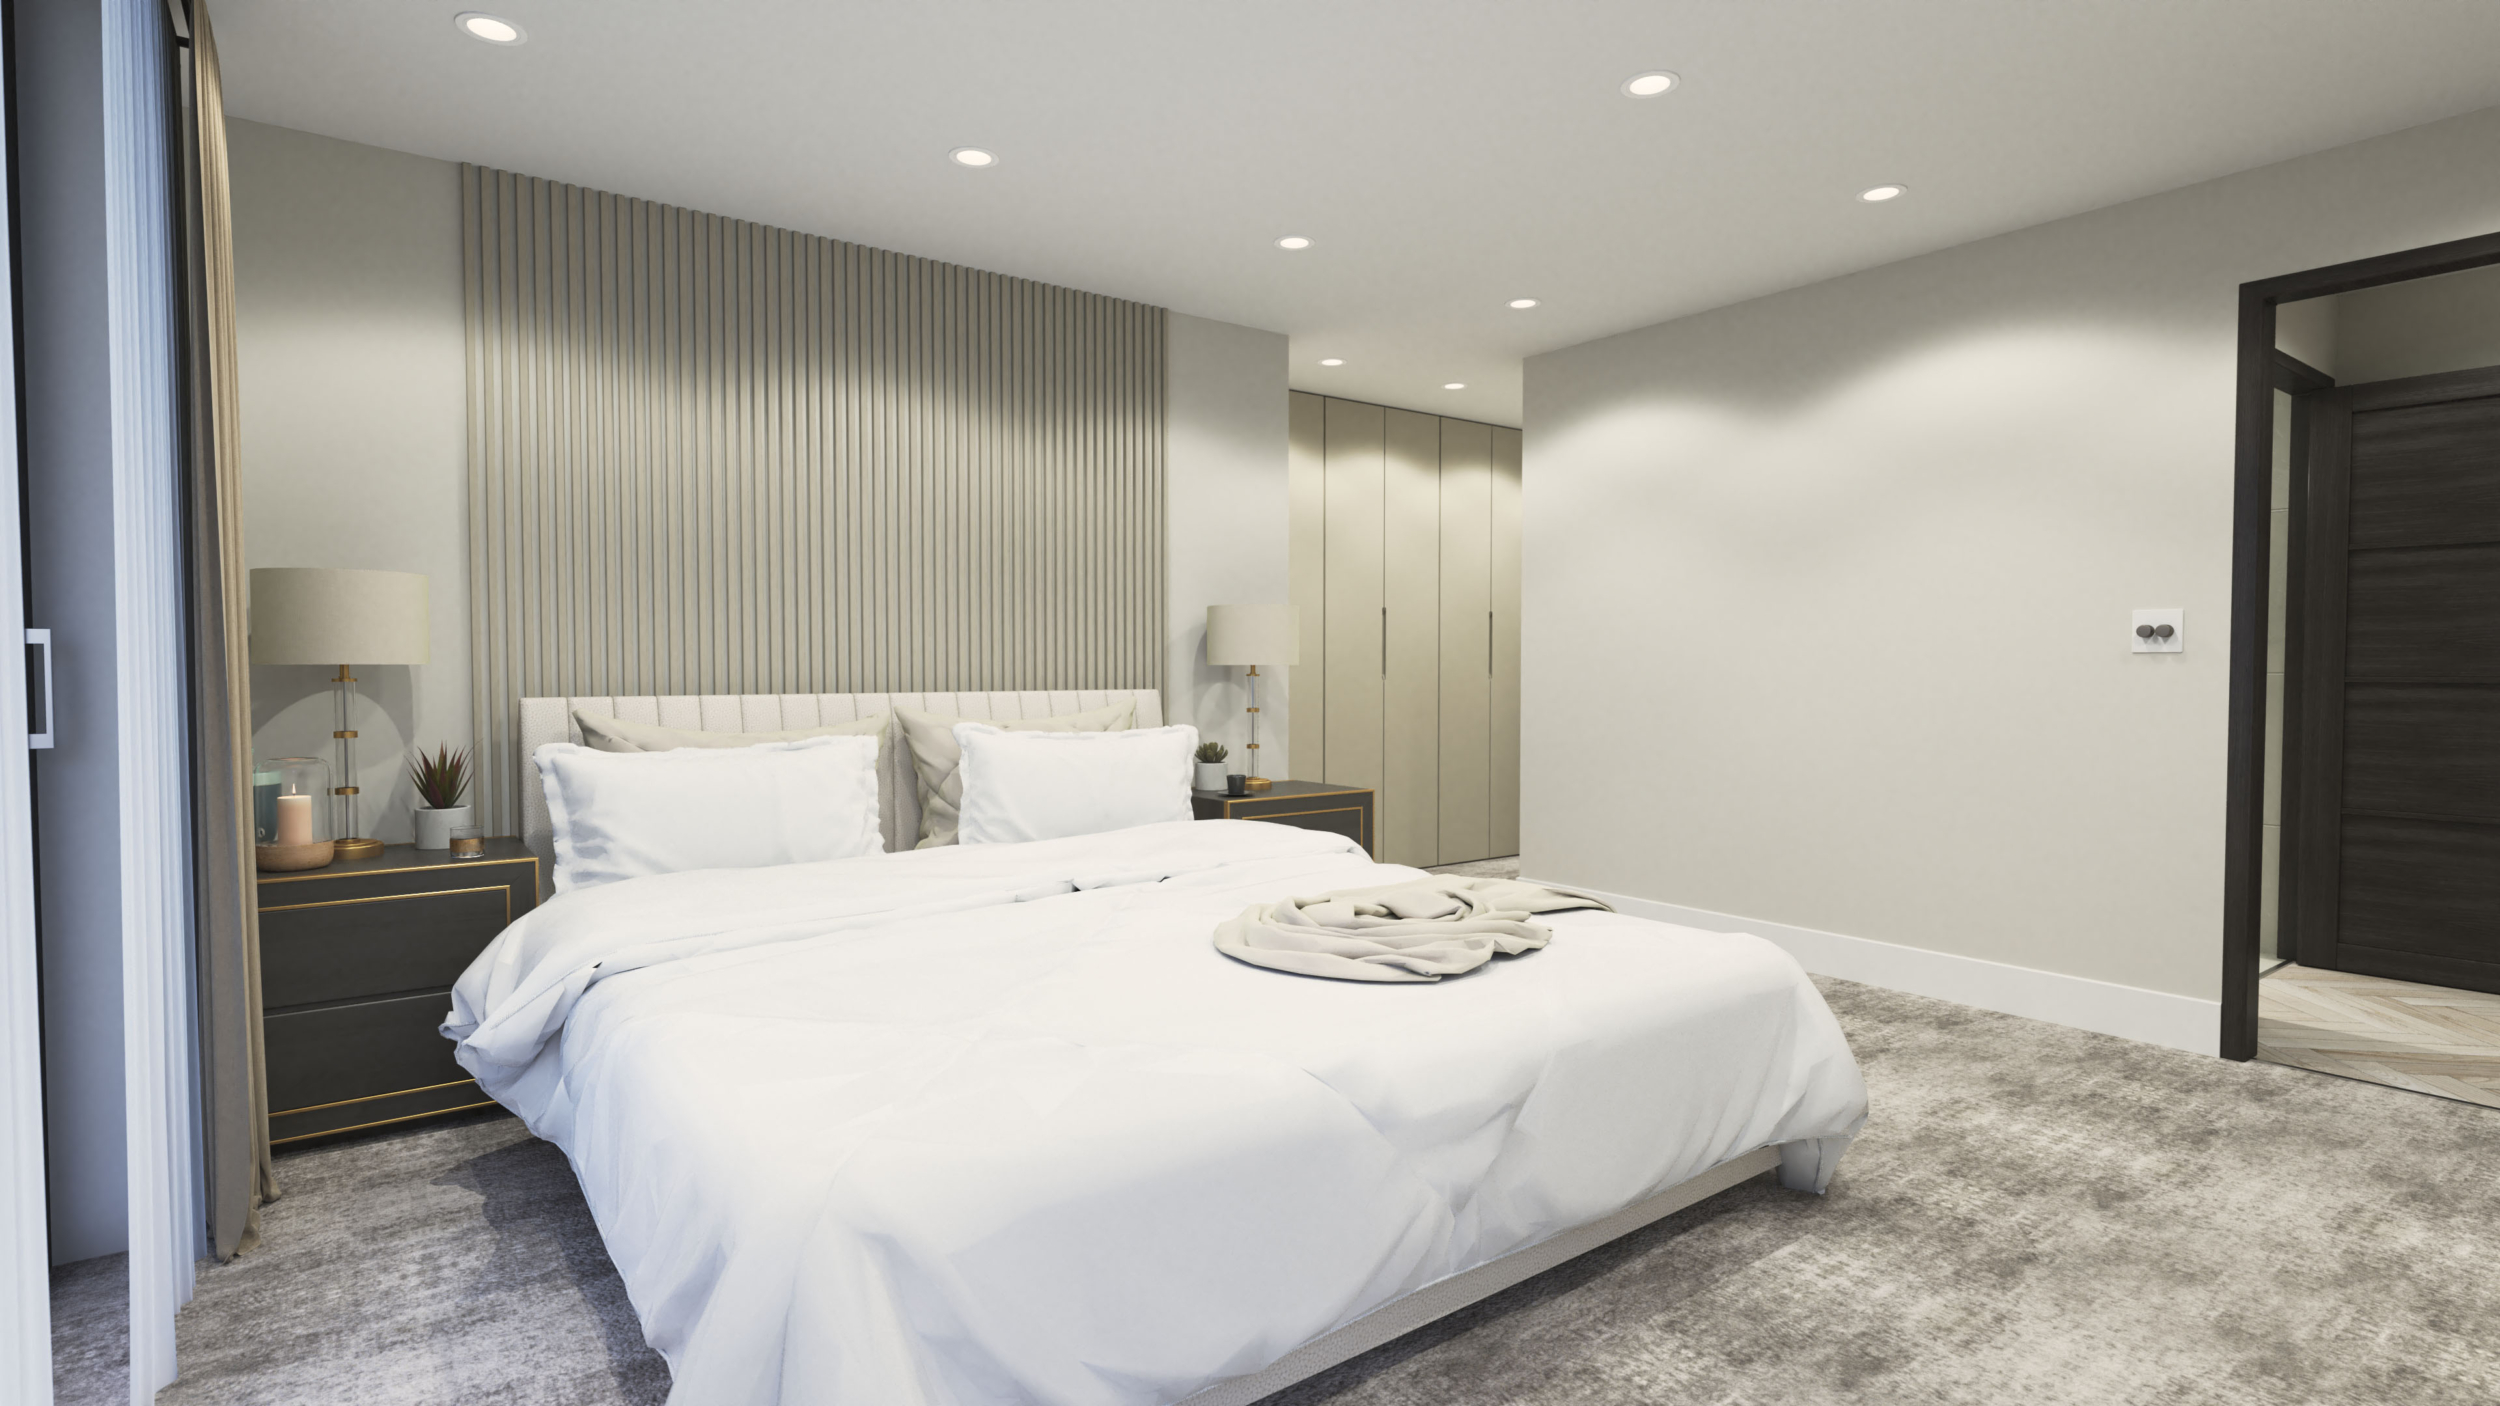 Luxury Penthouse Apartment, Master Bedroom CGI, Linear CGI Studio